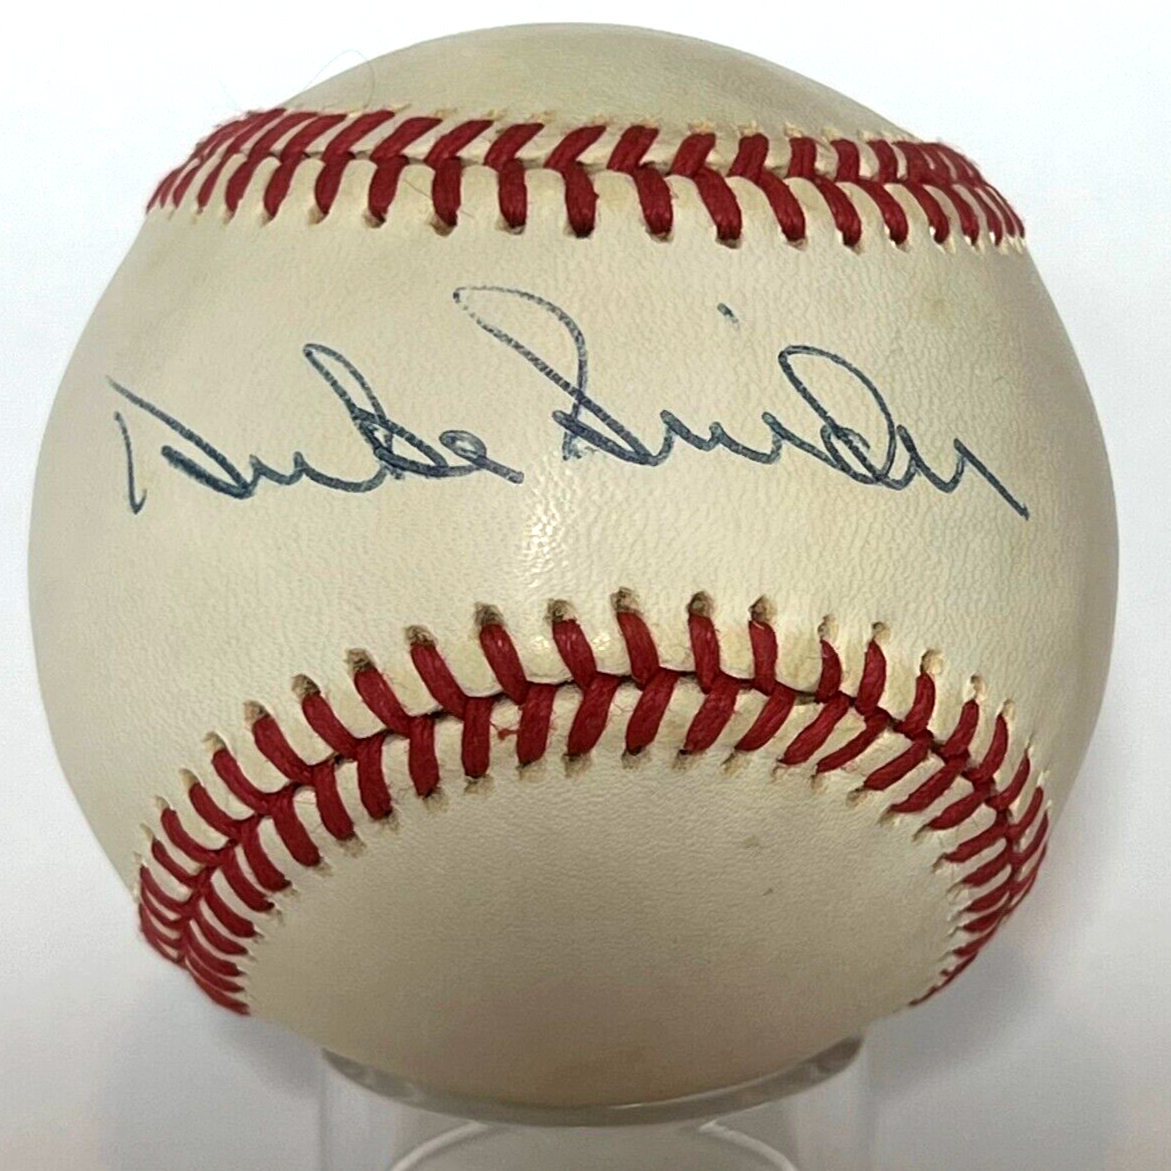 Duke Snider Single Signed Autograph Baseball. Brooklyn Dodgers. JSA signature.